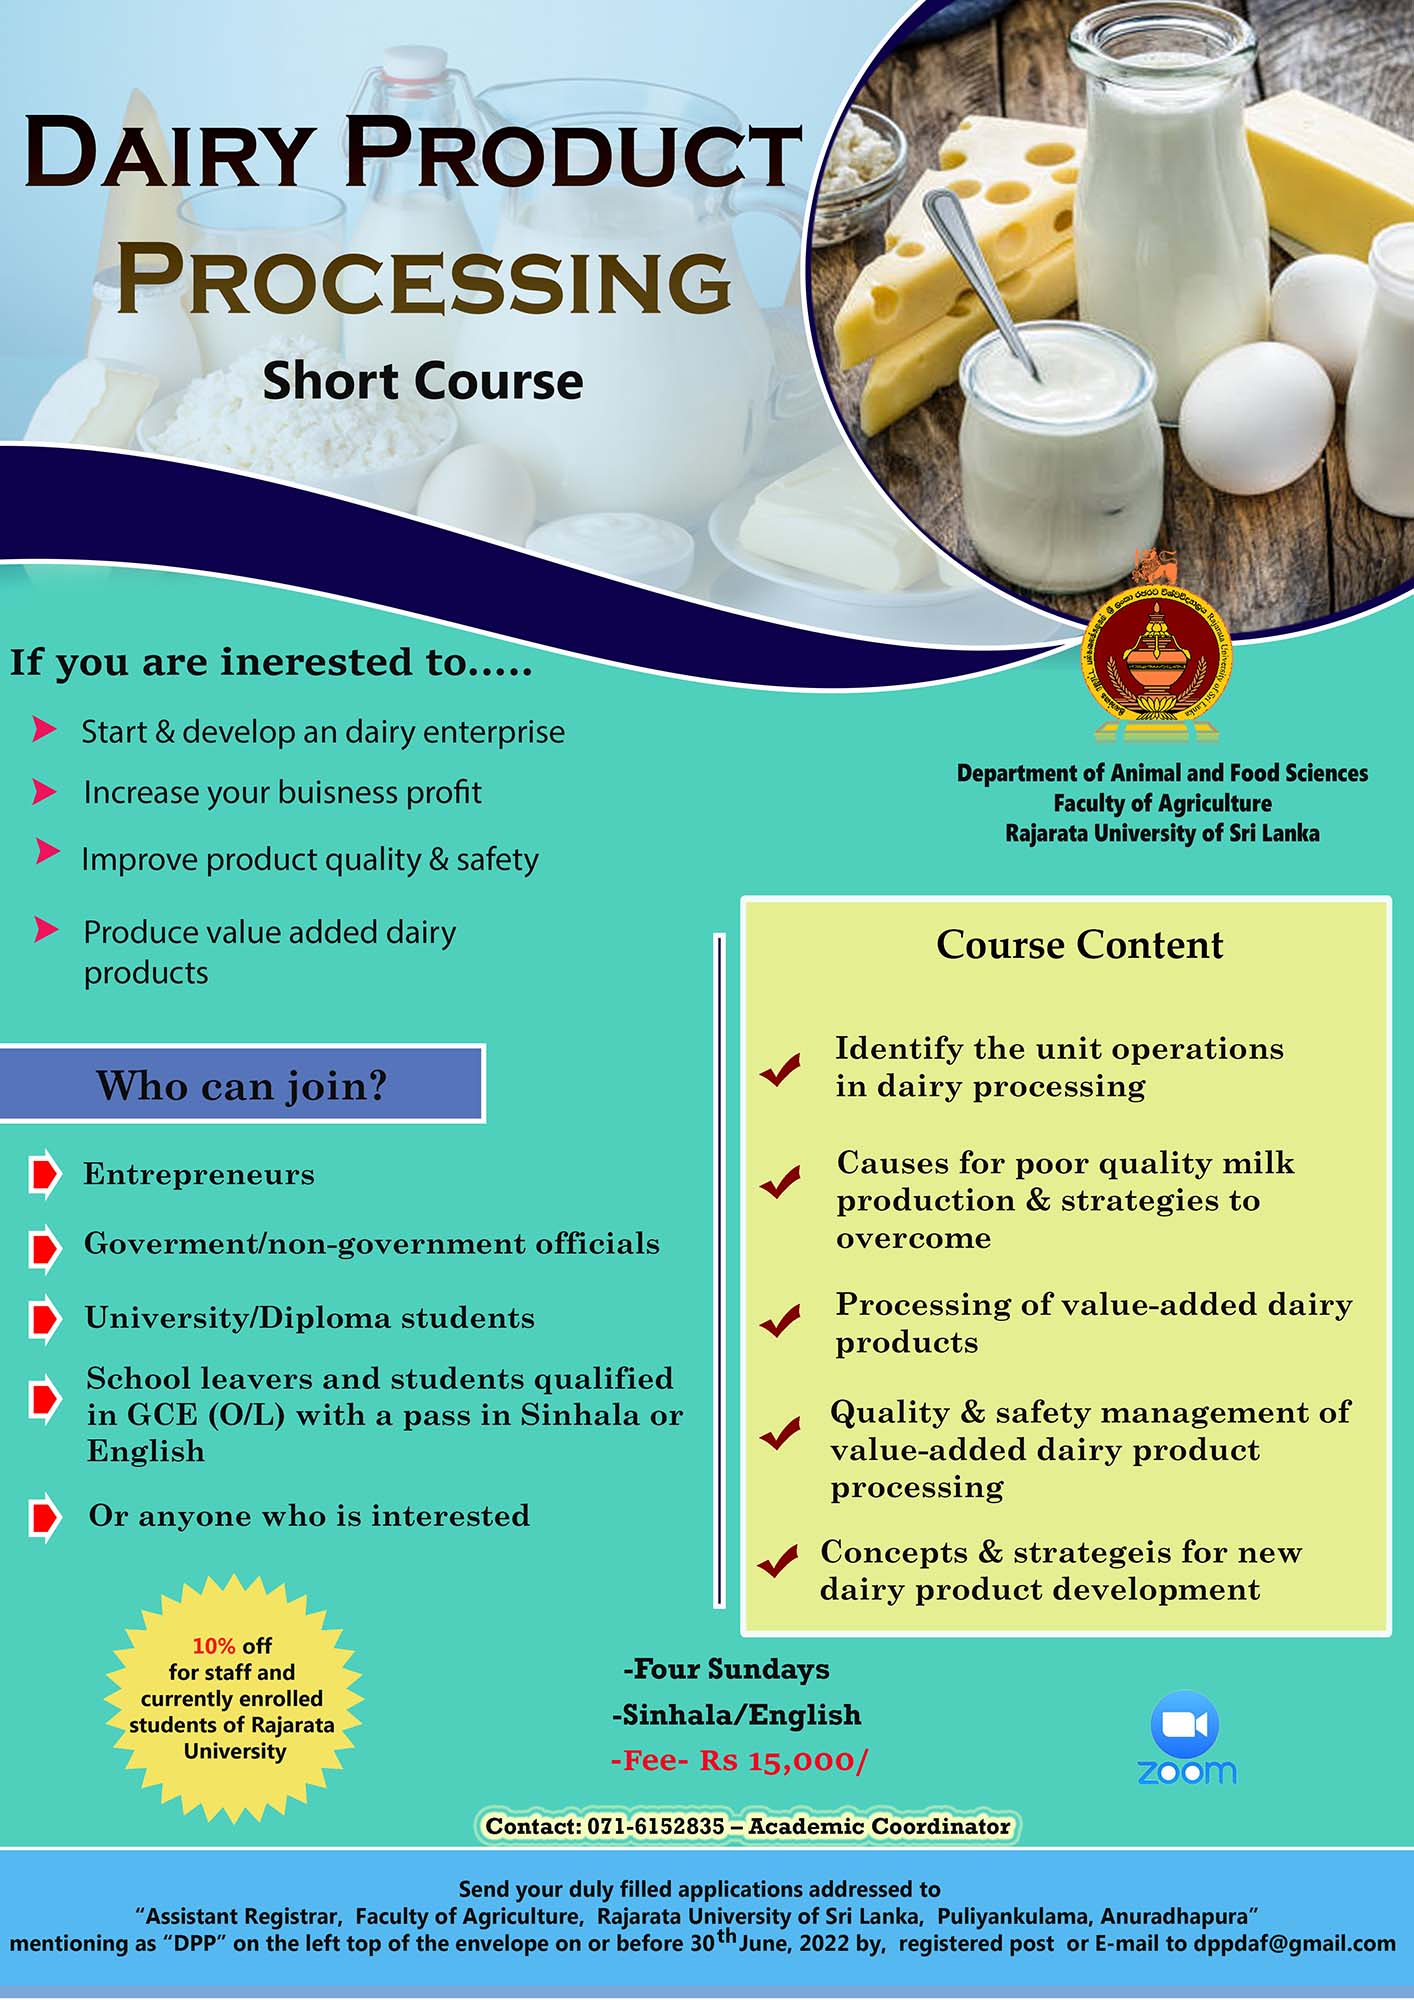 Short Course in Dairy Product Processing 2022 - Rajarata University of Sri Lanka